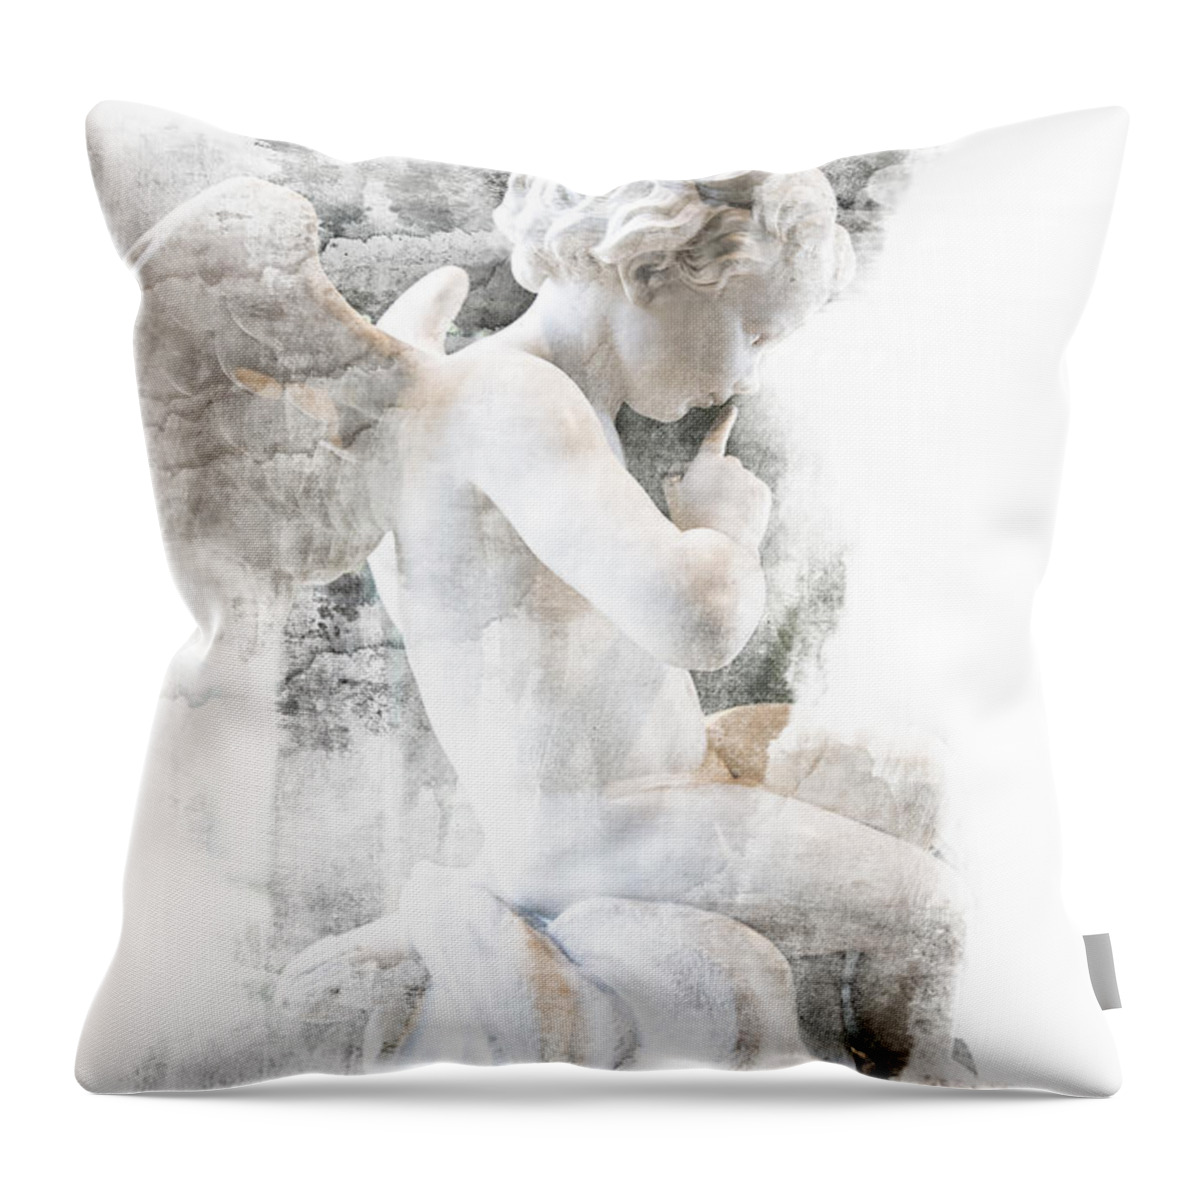 Cherub Throw Pillow featuring the photograph Shhhhh by Evie Carrier